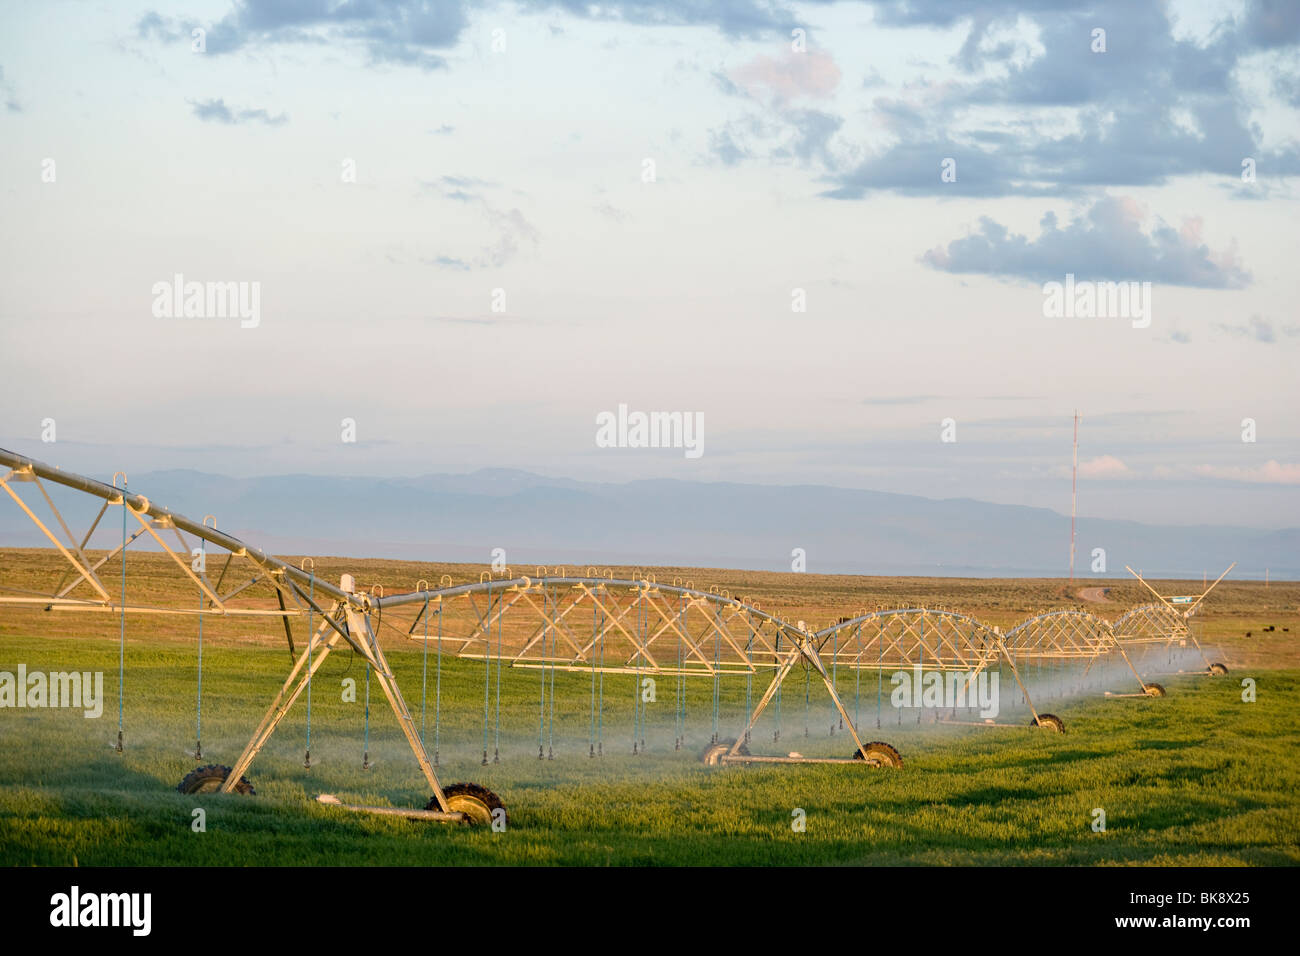 USA, Colorado, farm watering system Stock Photo